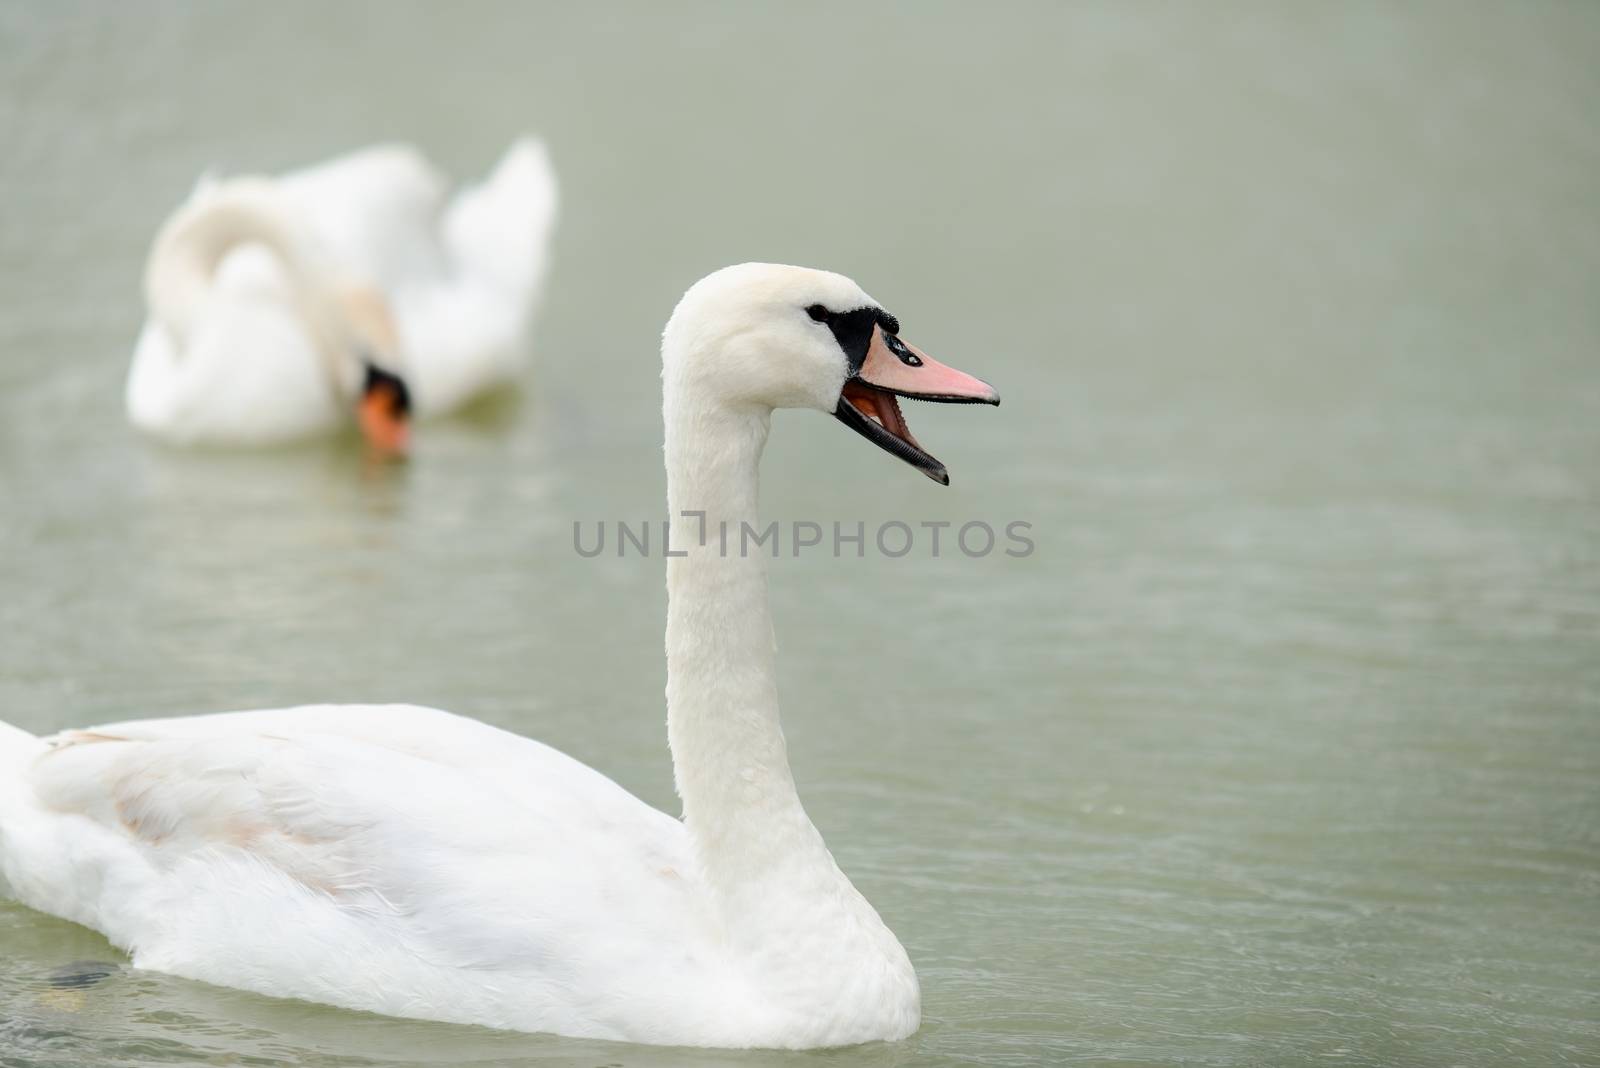 Swan swimming with ducks swimming on lake